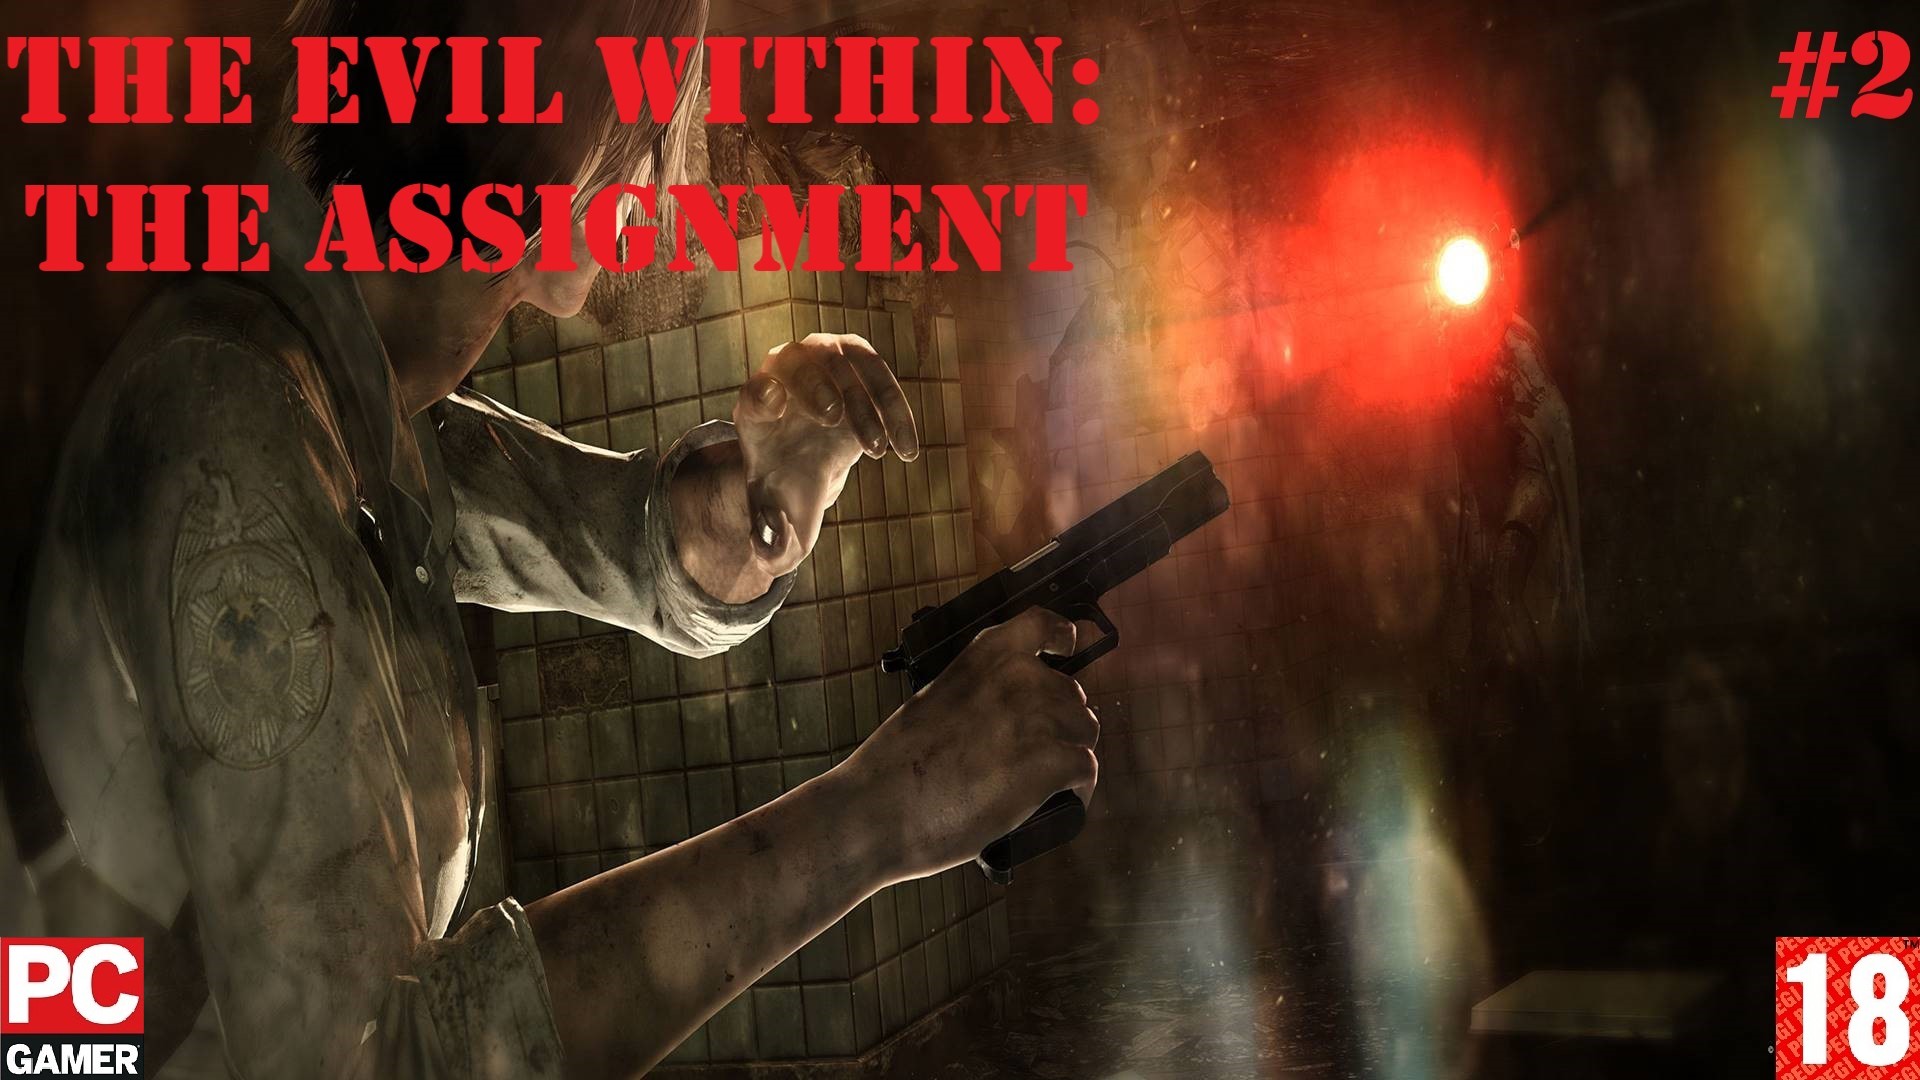 The Evil Within: The Assignment(PC) - Прохождение #2, DLC. (без комментариев) на Русском.